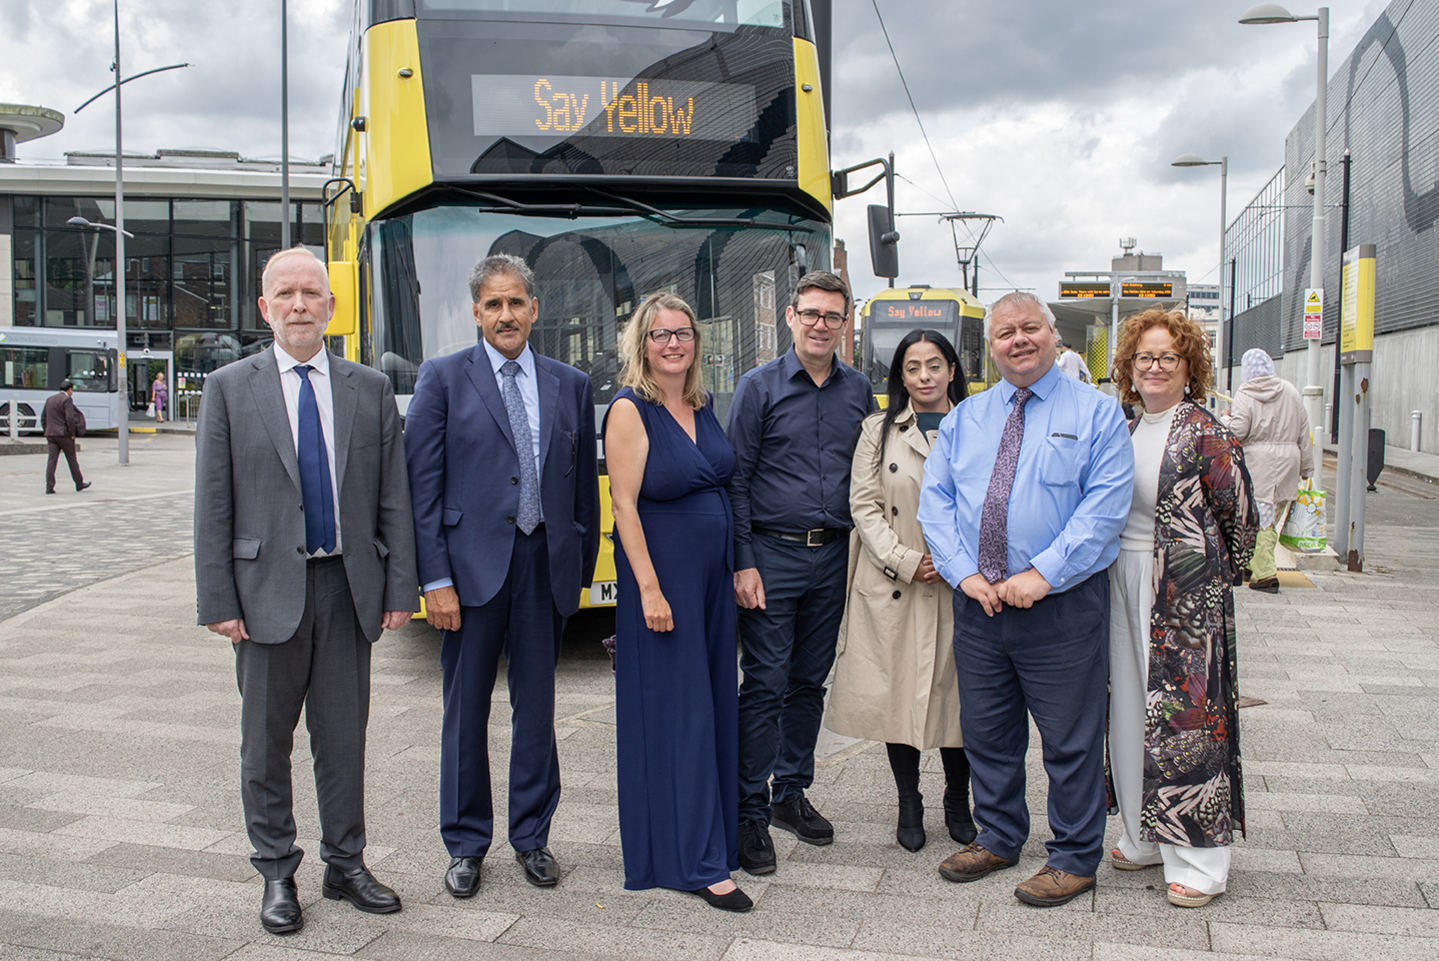 Manchester Metrolink prepares for integrated travel options